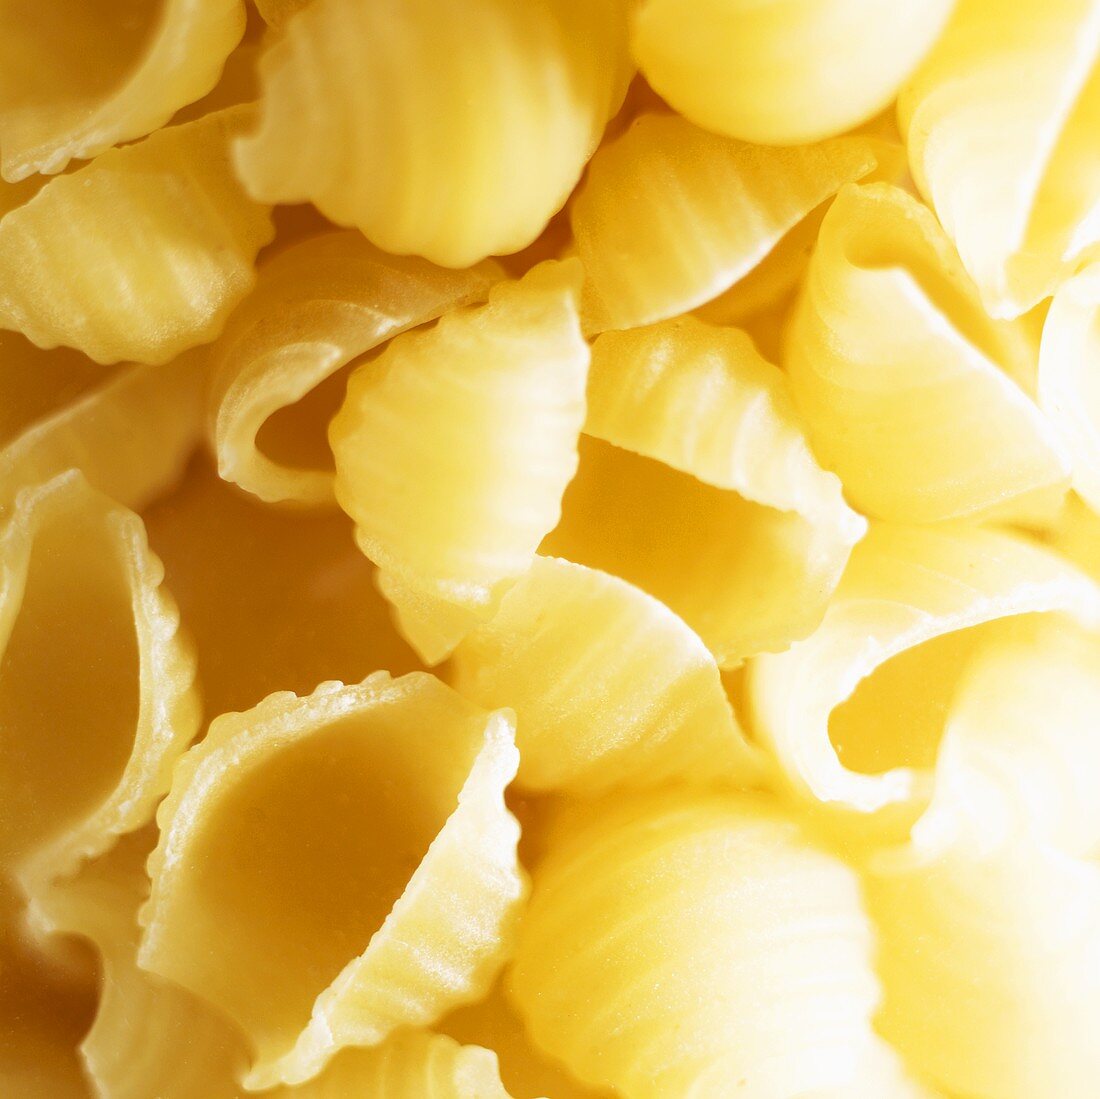 Conchiglie (pasta shells)